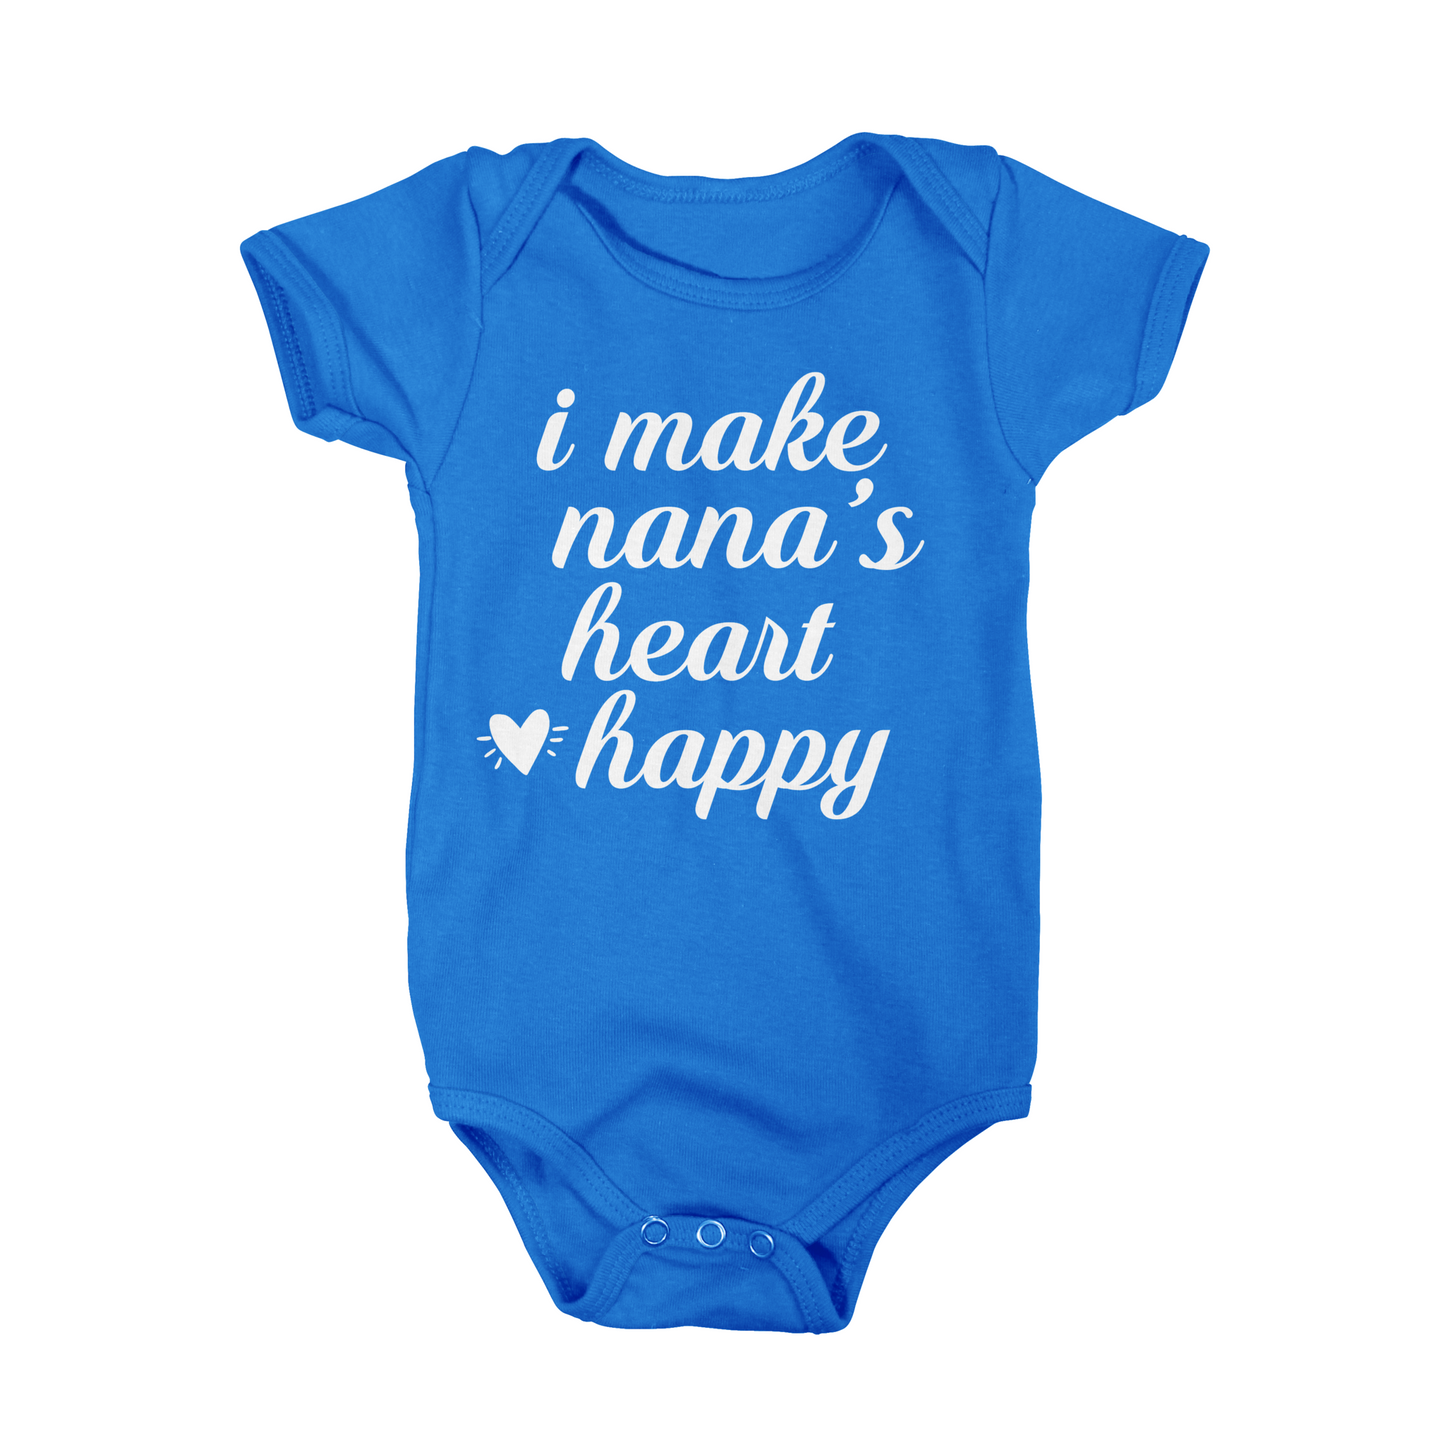 I Make Nana's Heart Happy Baby Onesie